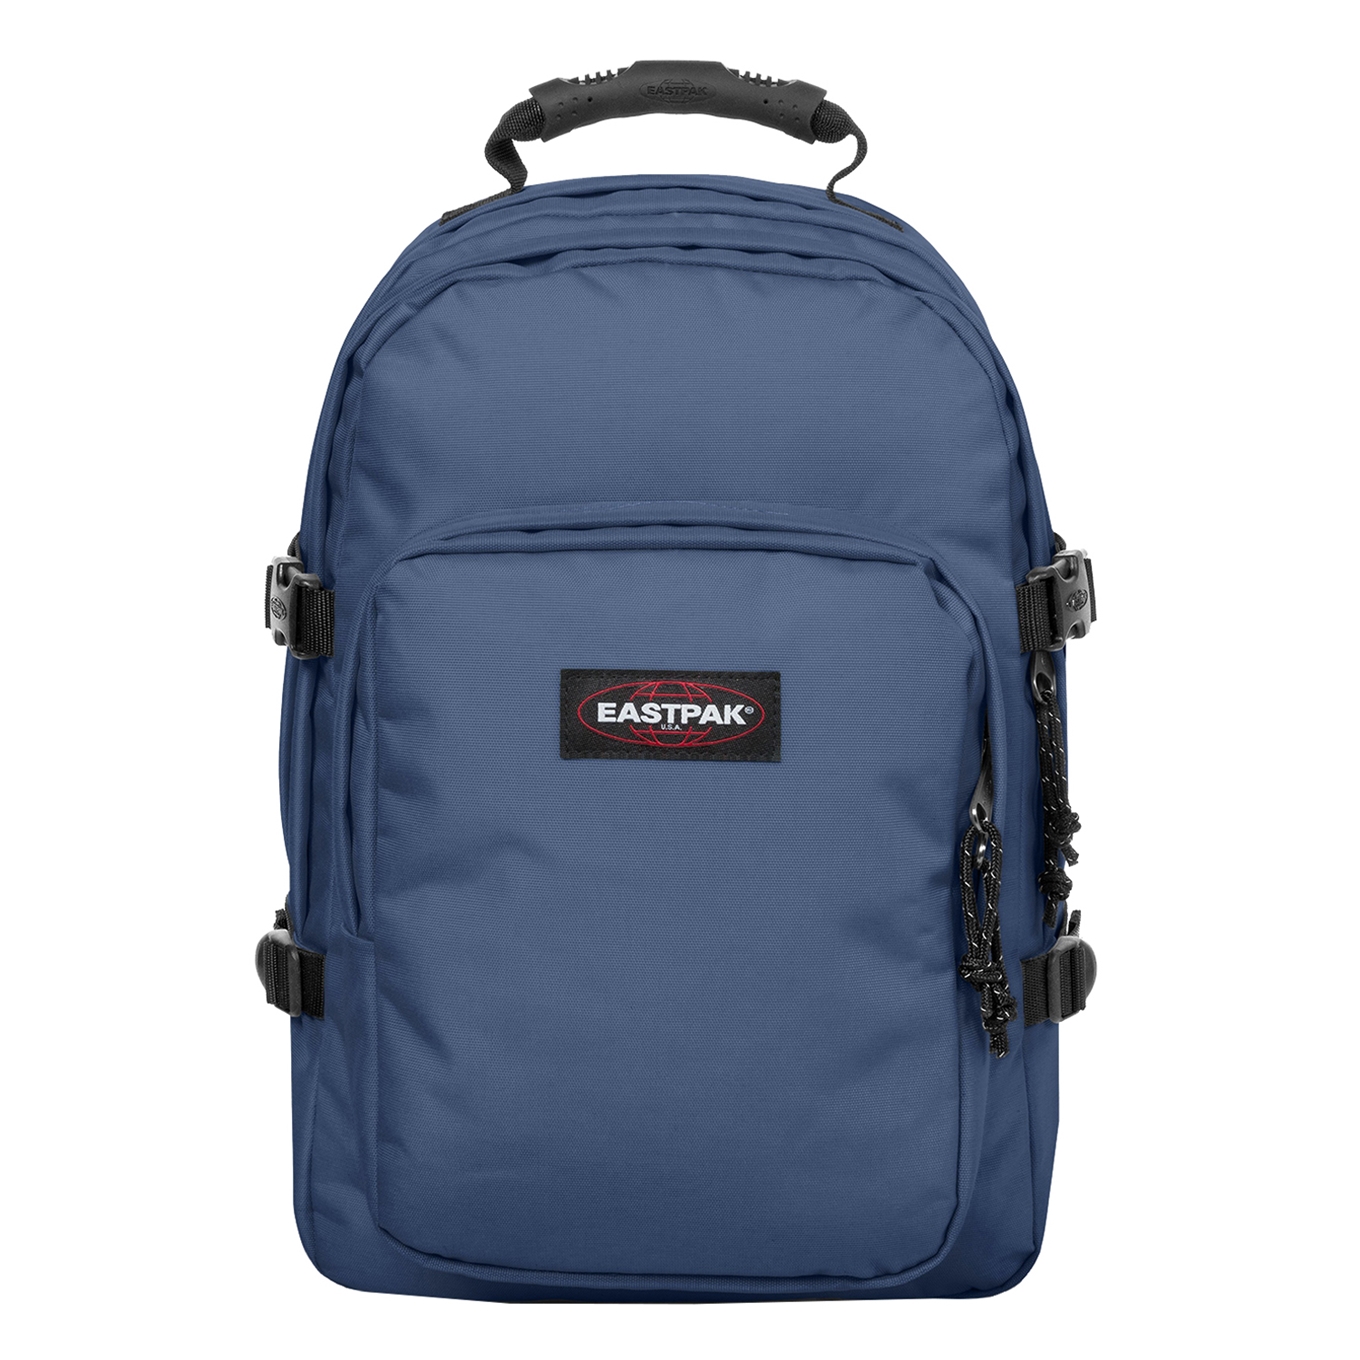 Eastpak Provider powder pilot backpack